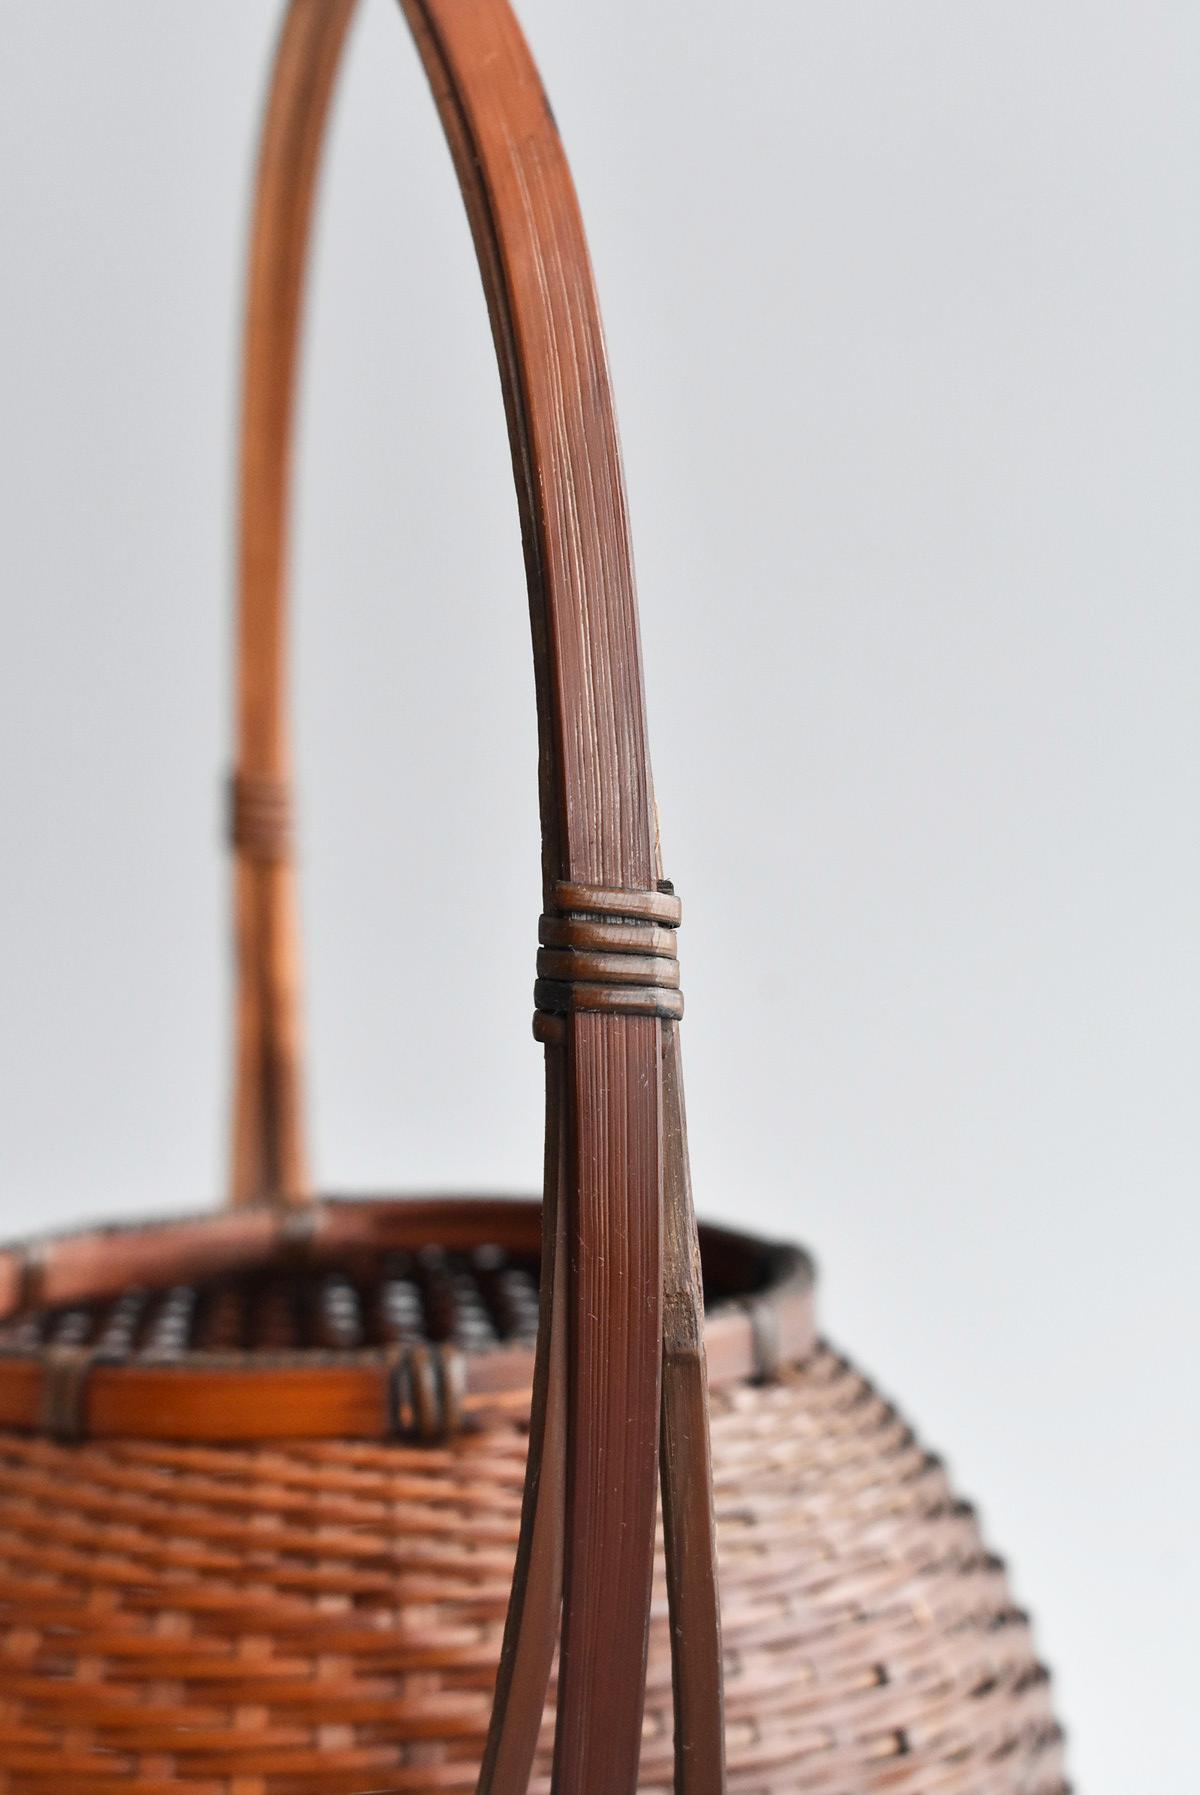 Showa Period in Japan, Small Bamboo Basket / Old Antique Flower Basket /Folk Art 8